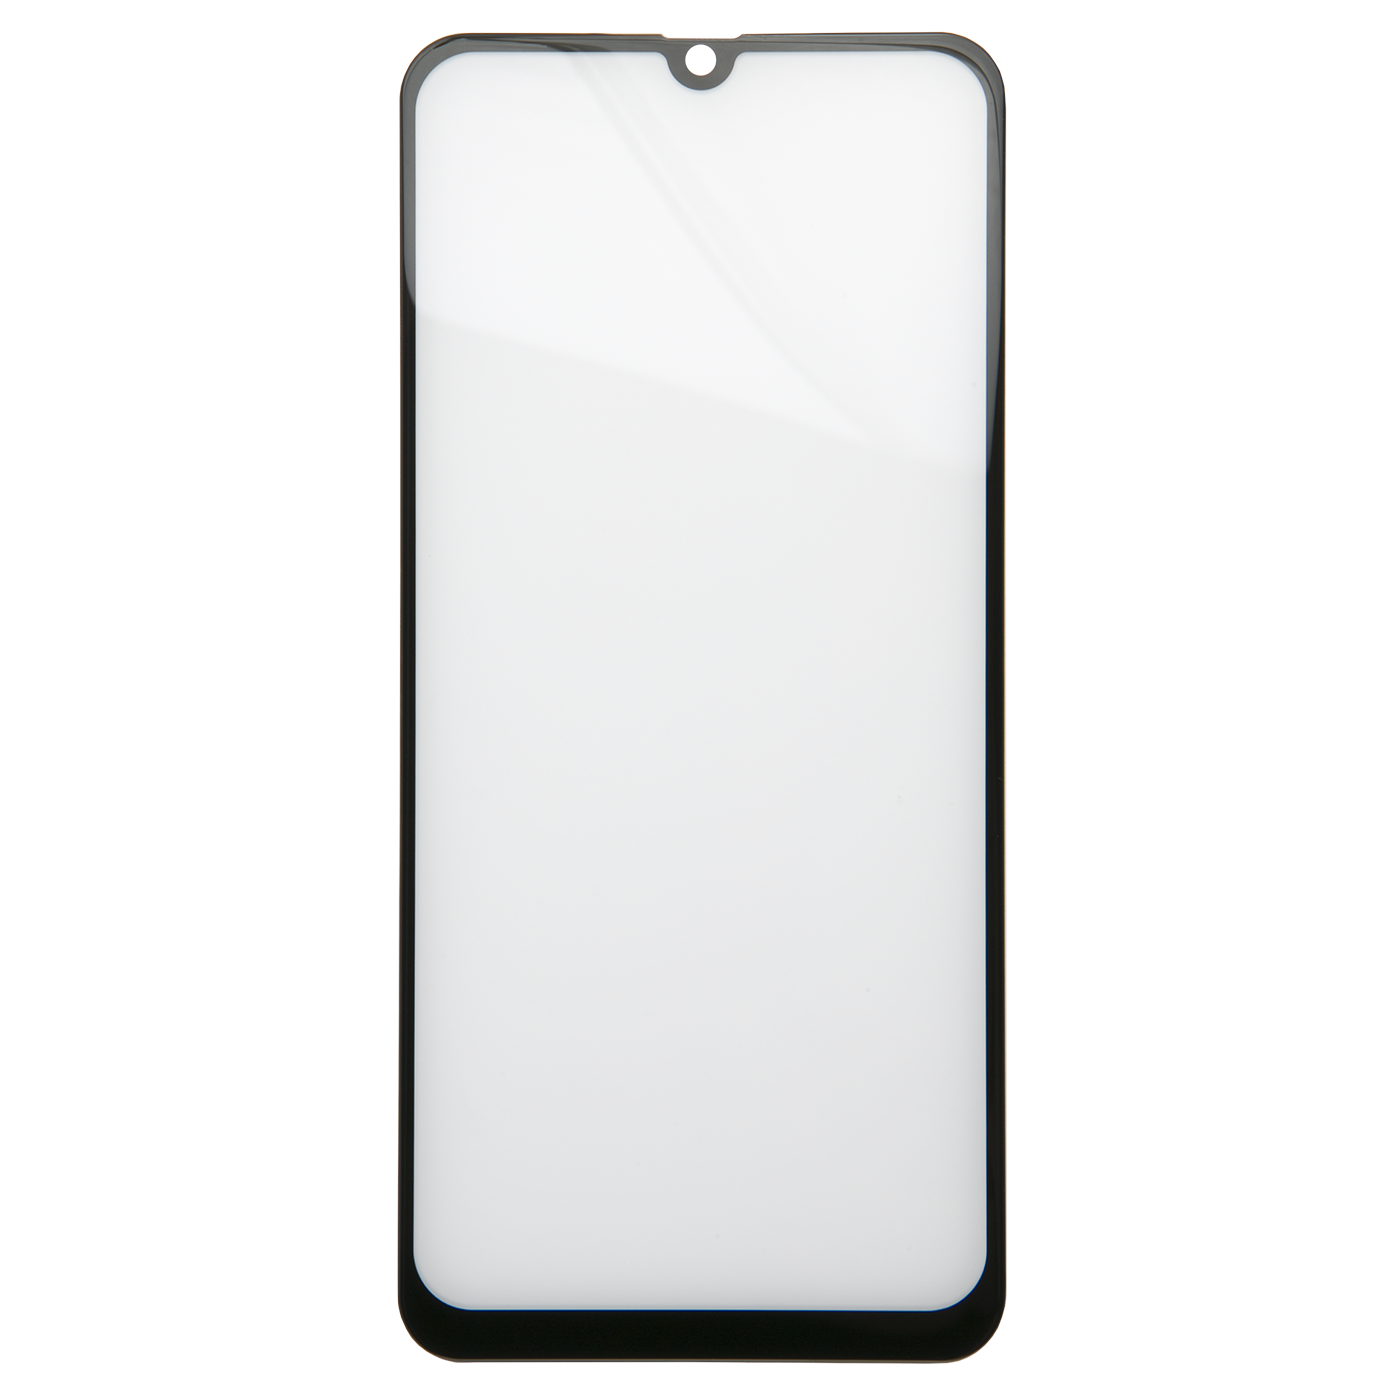 Защитный экран Samsung Galaxy A50s Full Screen (3D) tempered glass FULL GLUE